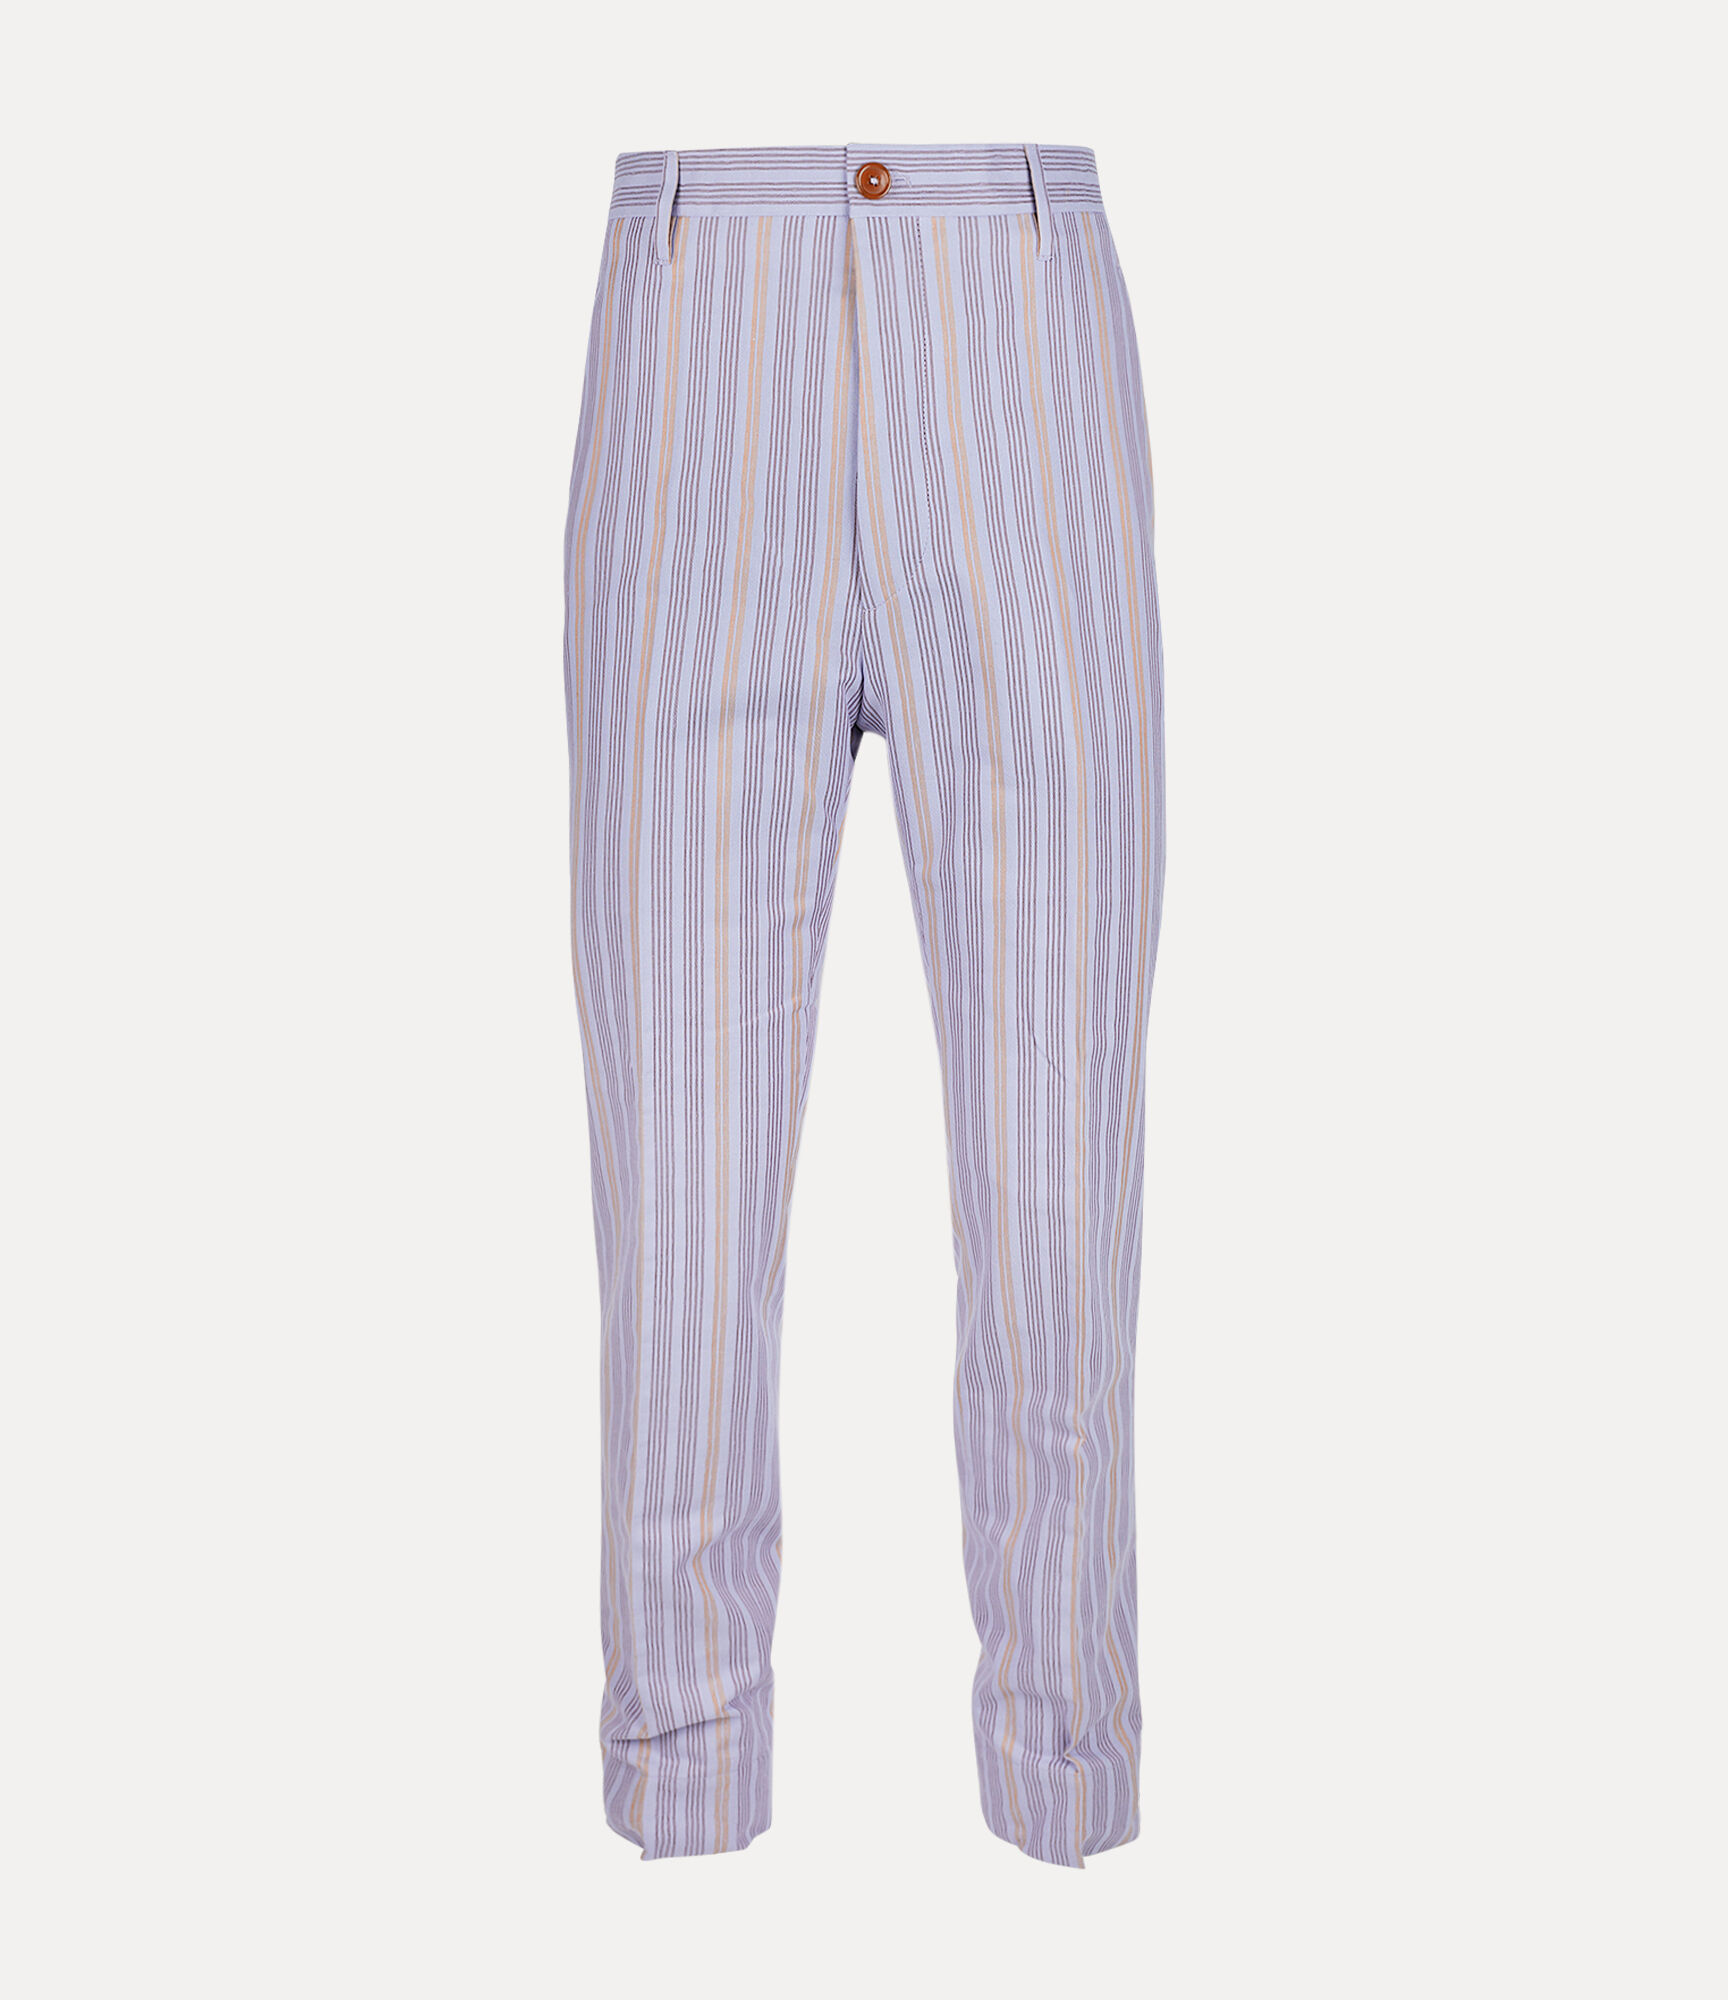 Designer Cropped Pants for Men - FARFETCH AU